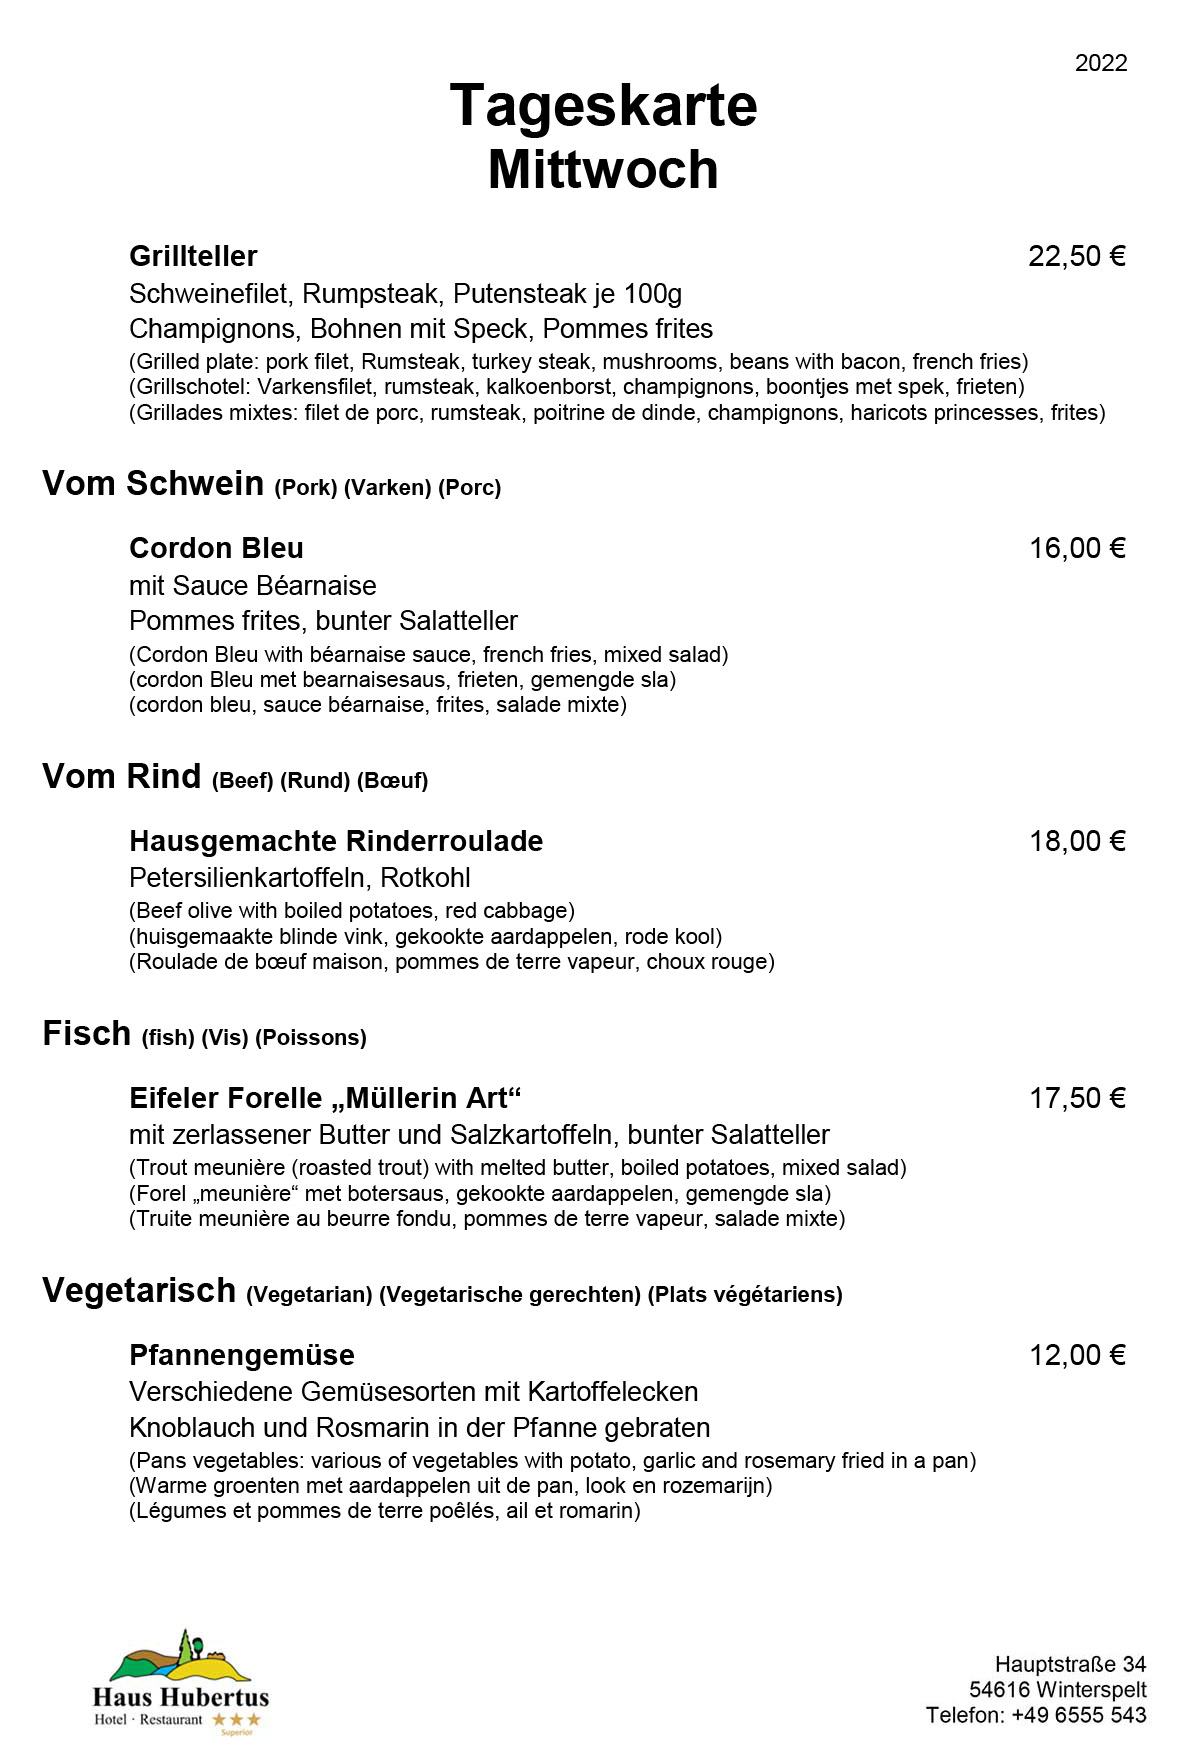 Hotel - Restaurant Haus Hubertus - Speisekarte 2022 - Tageskarte / Mittwoch